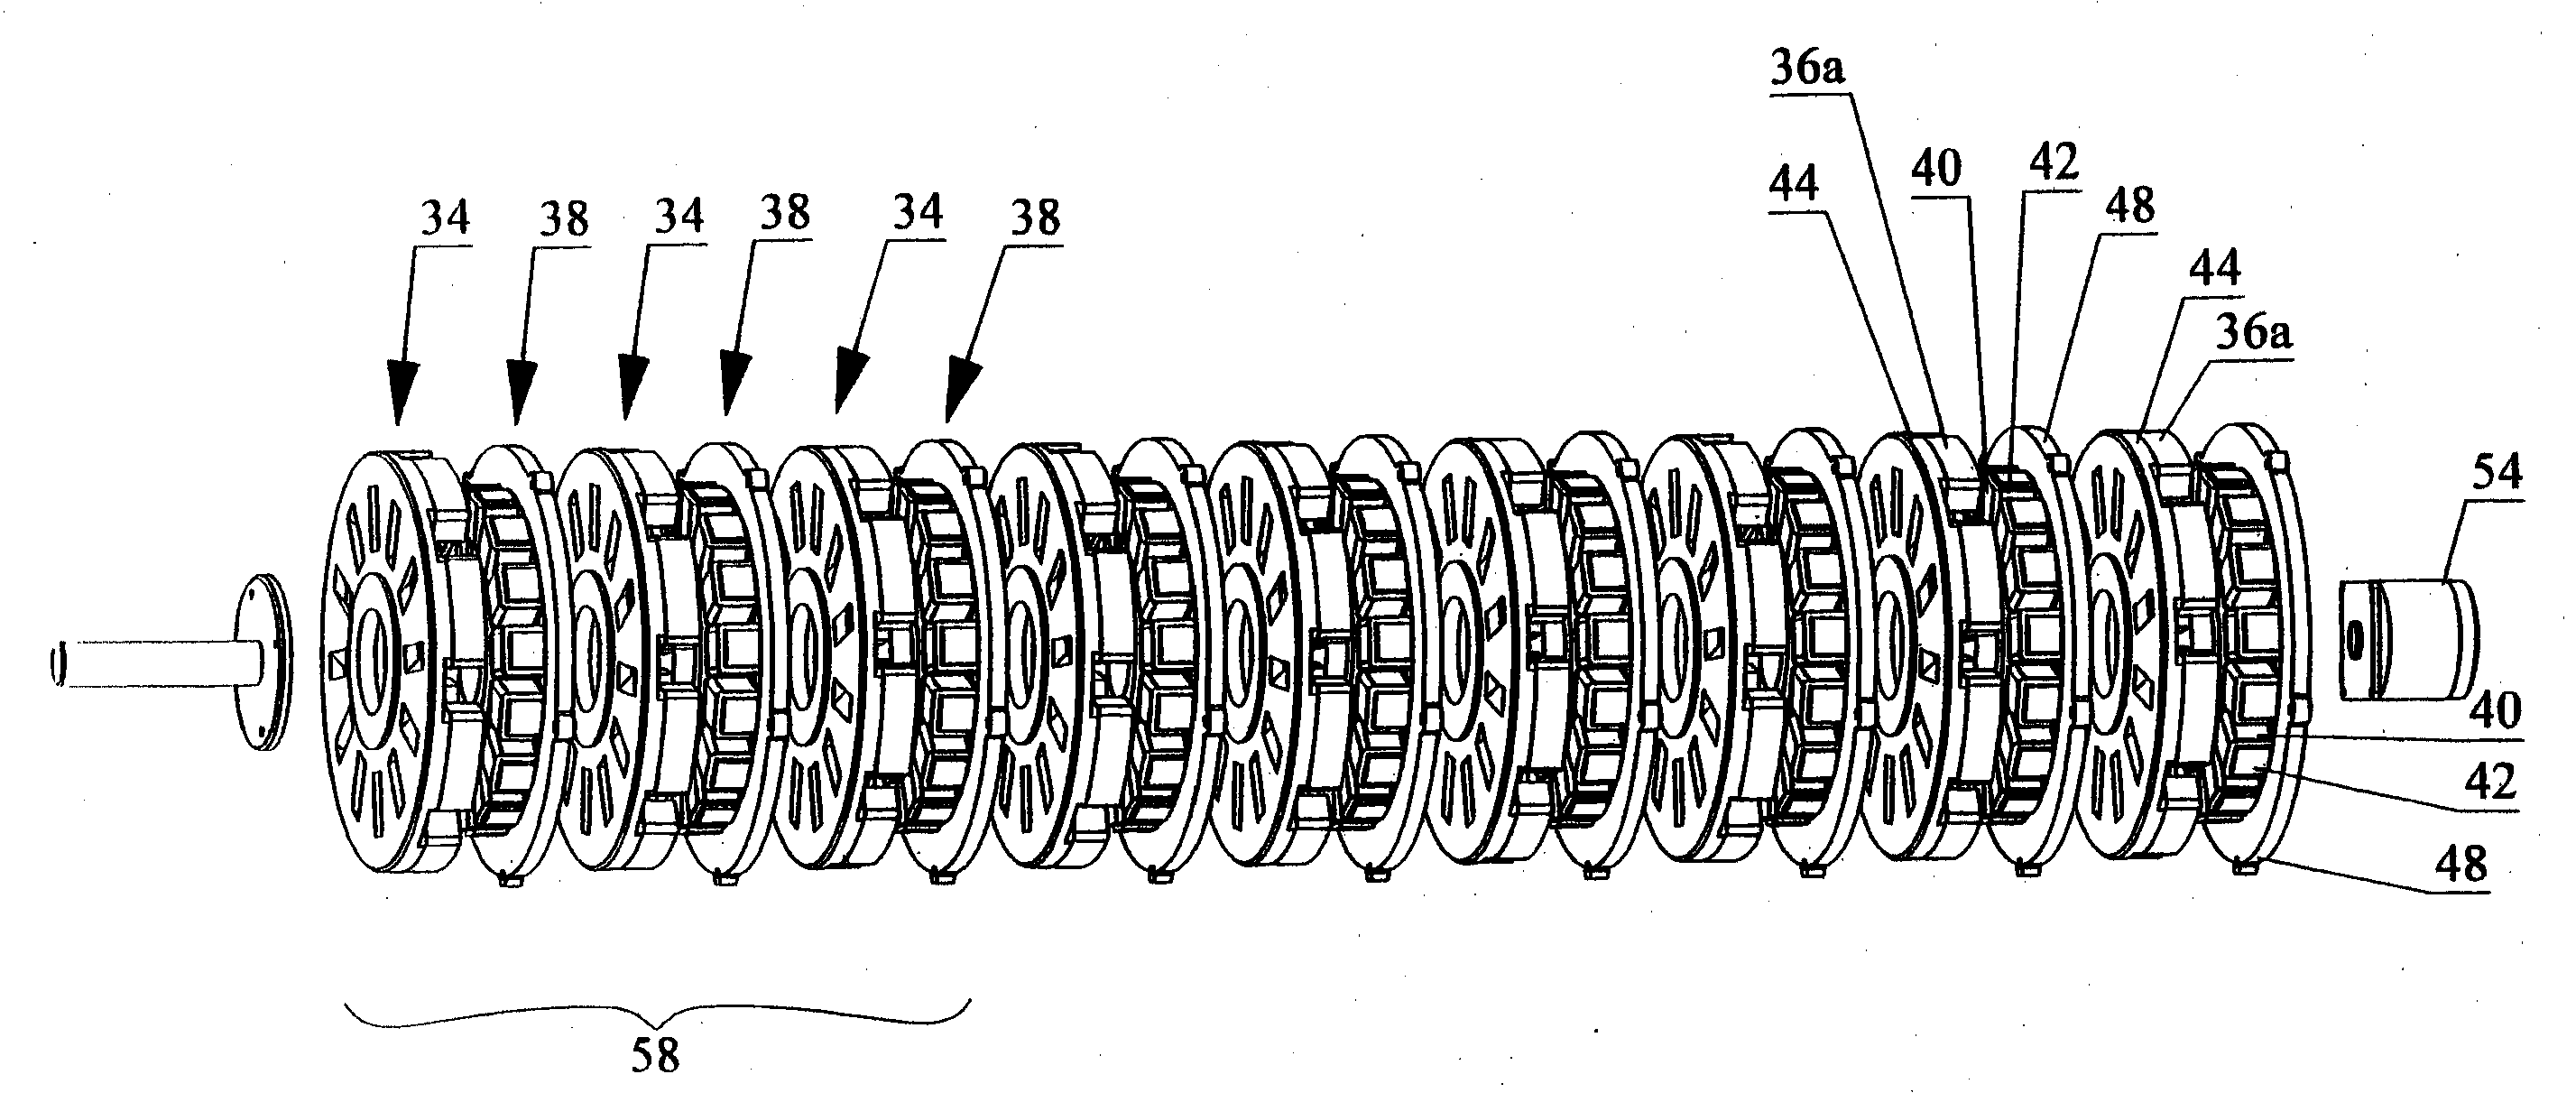 Polyphasic multi-coil generator